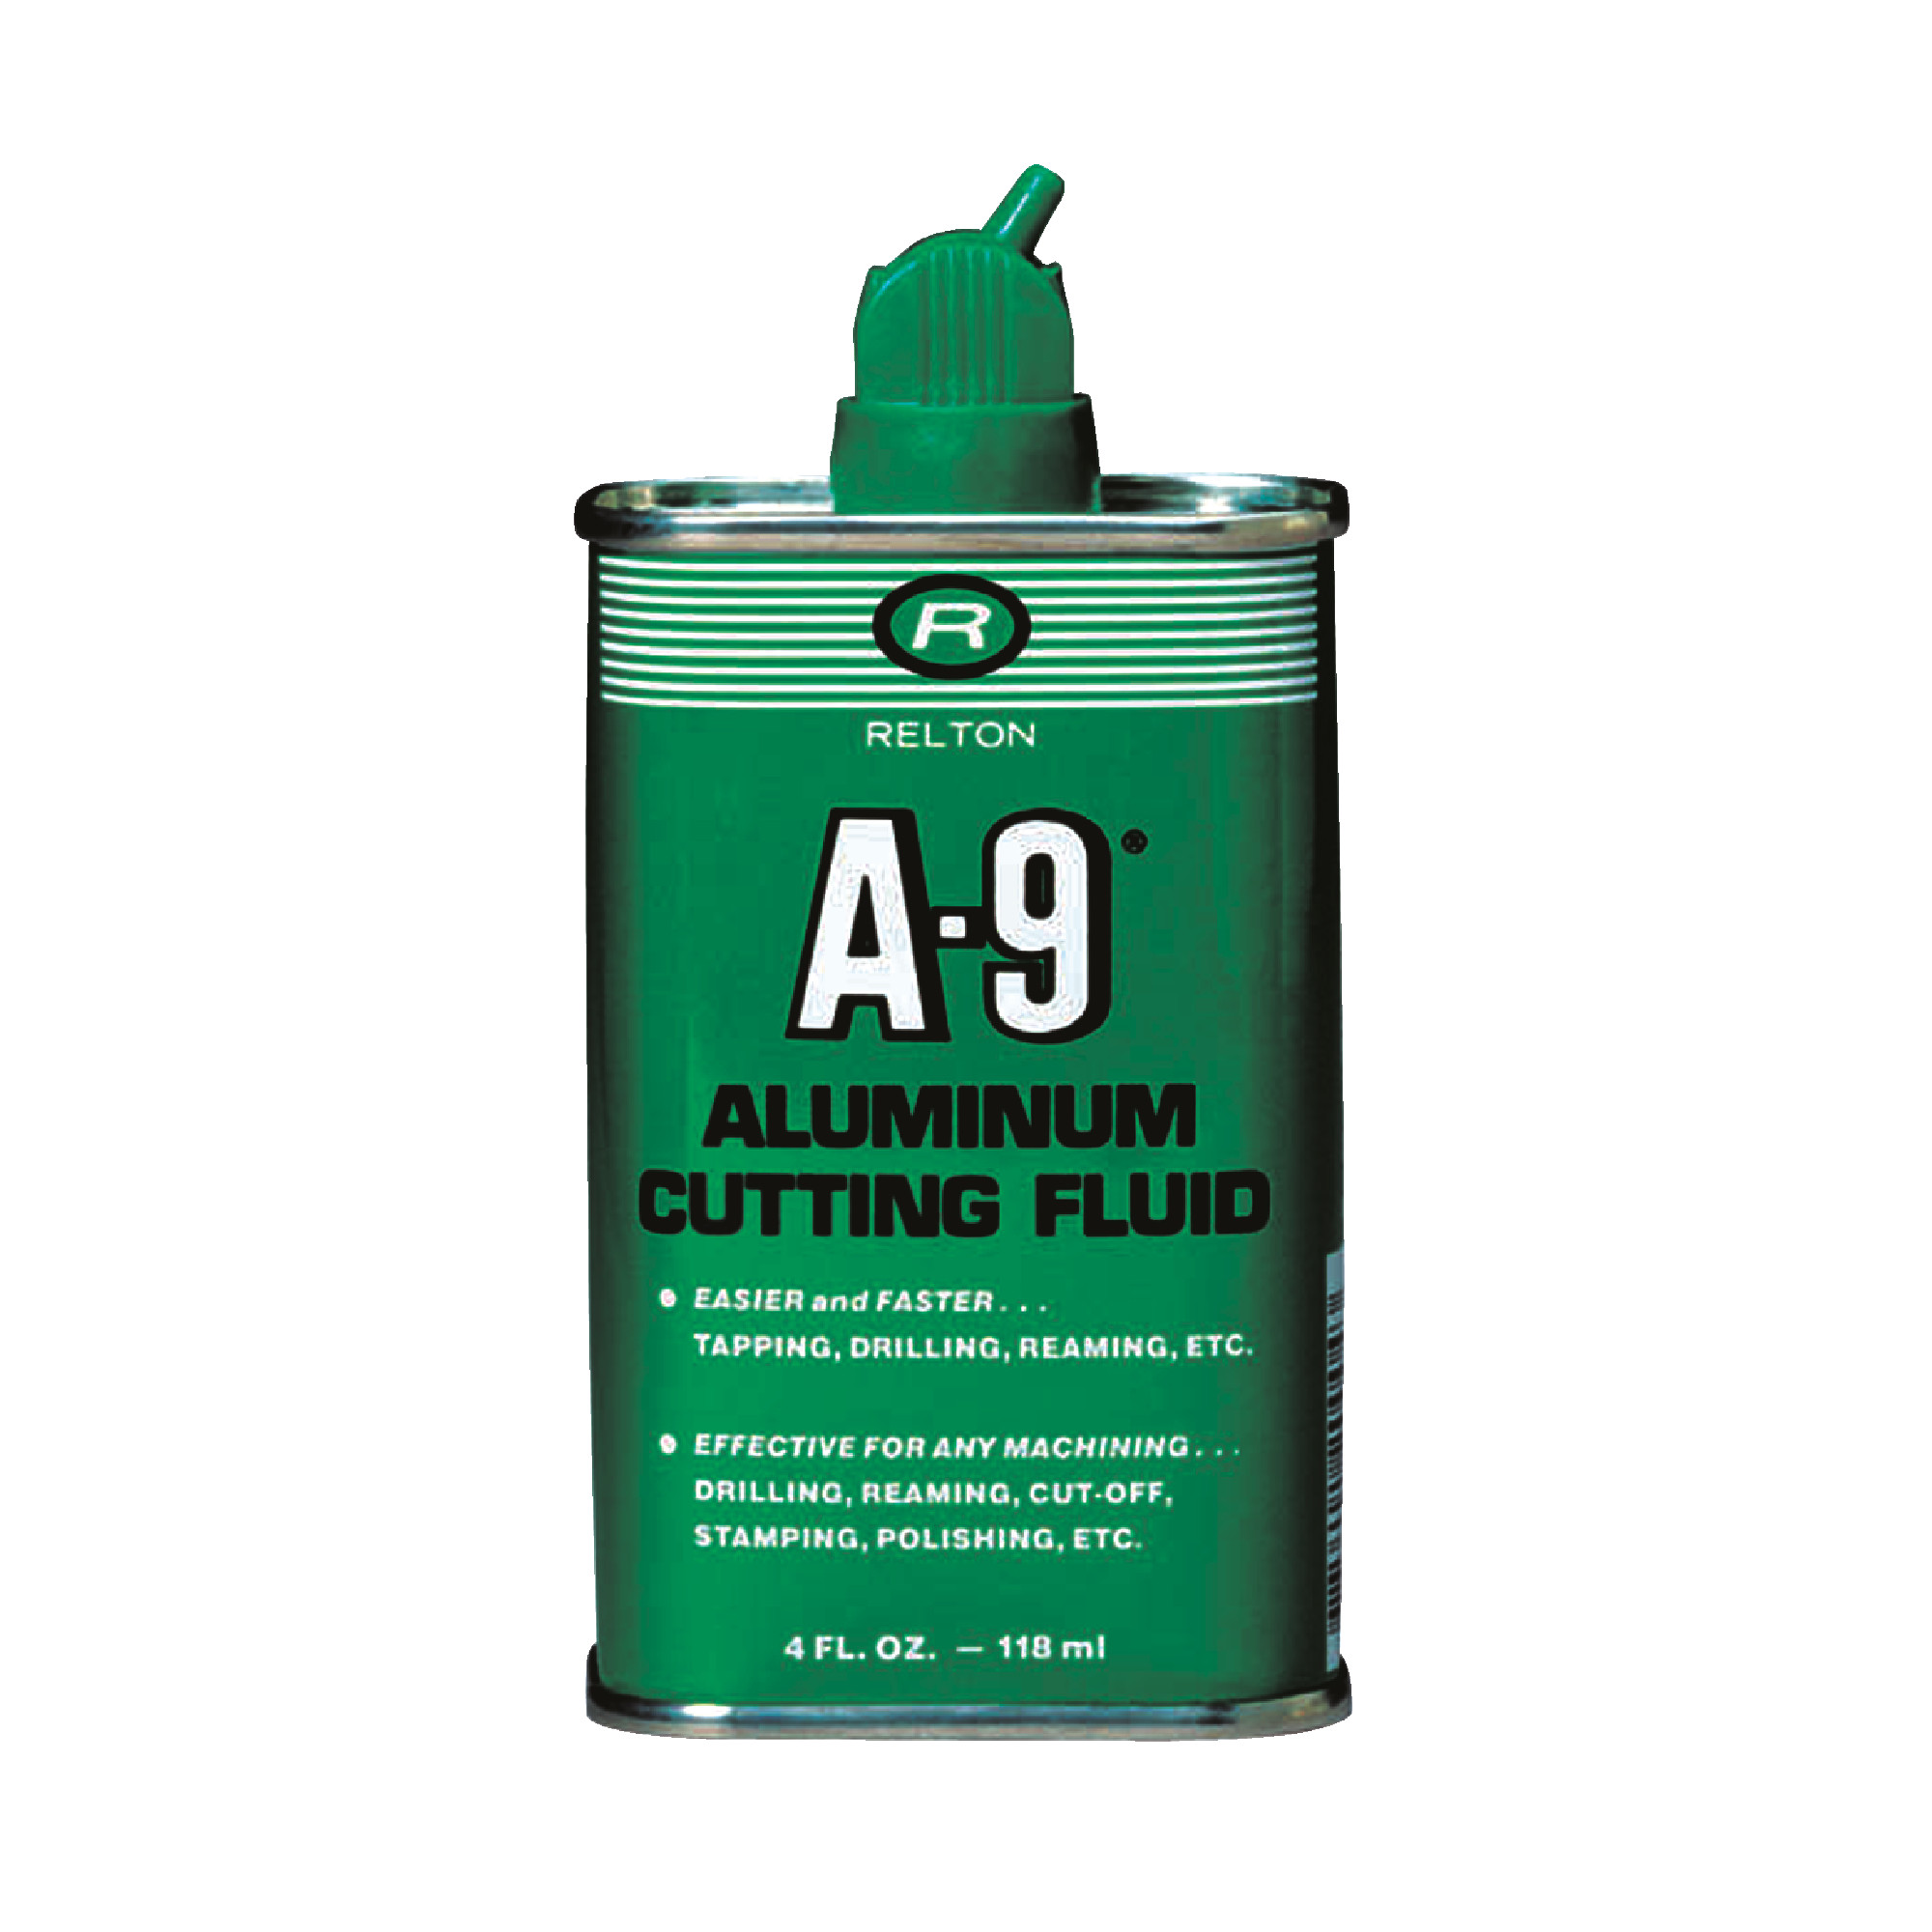 A-9 Aluminum Cutting Fluid